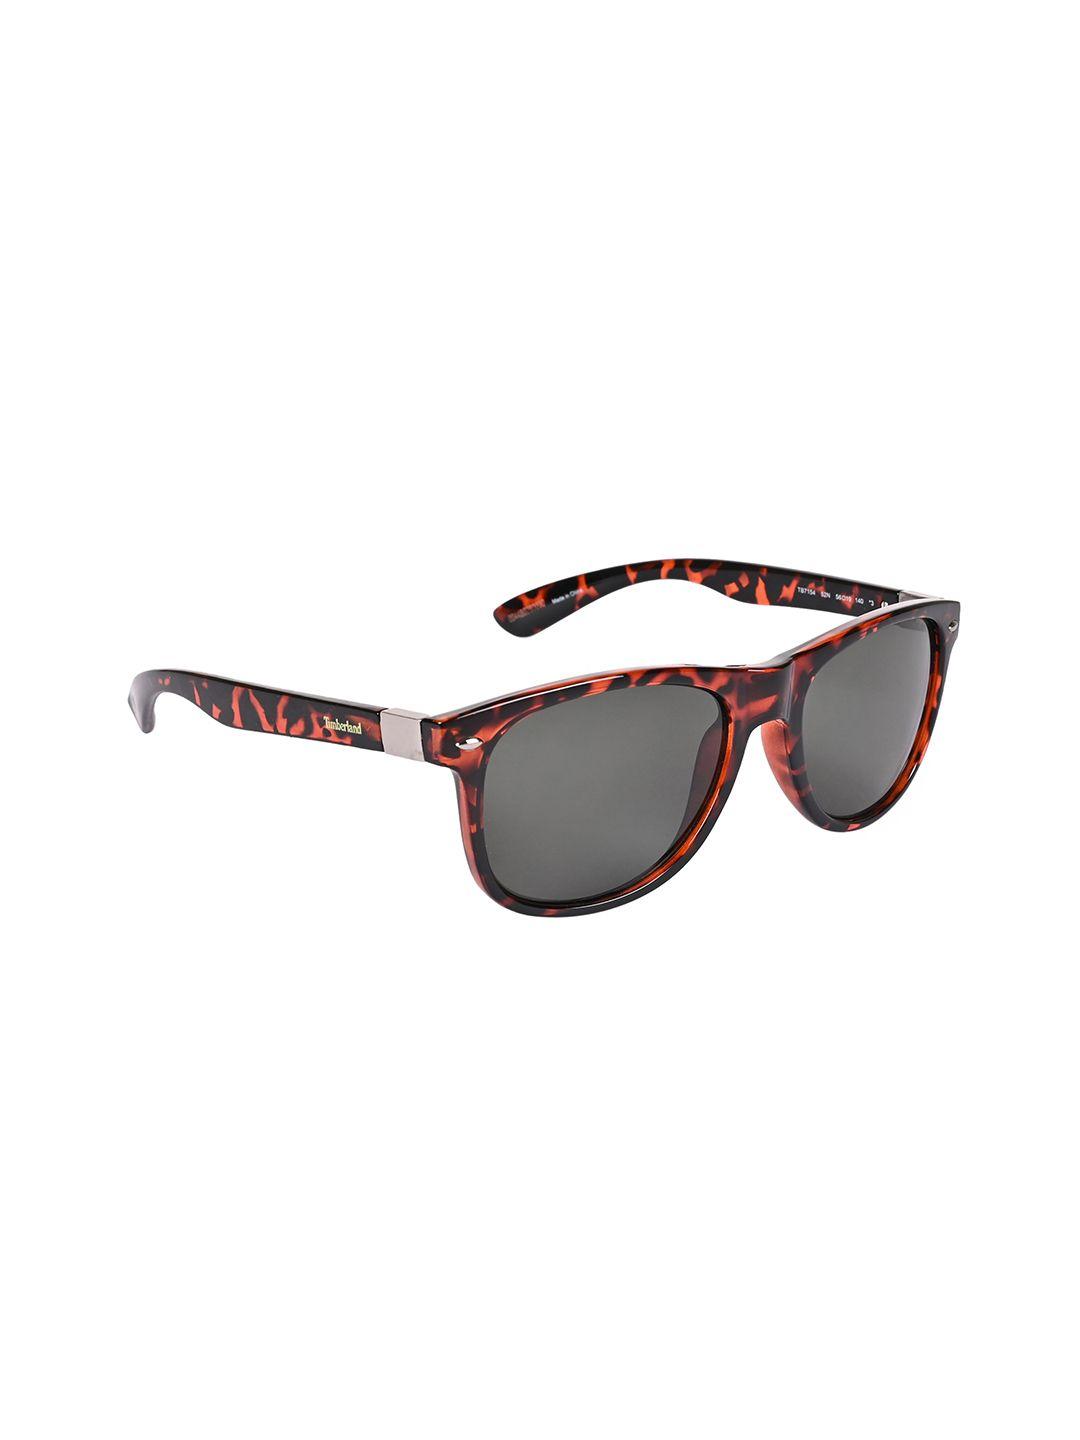 timberland-men-uv-protective-lens-square-sunglasses-tb7154-56-52n